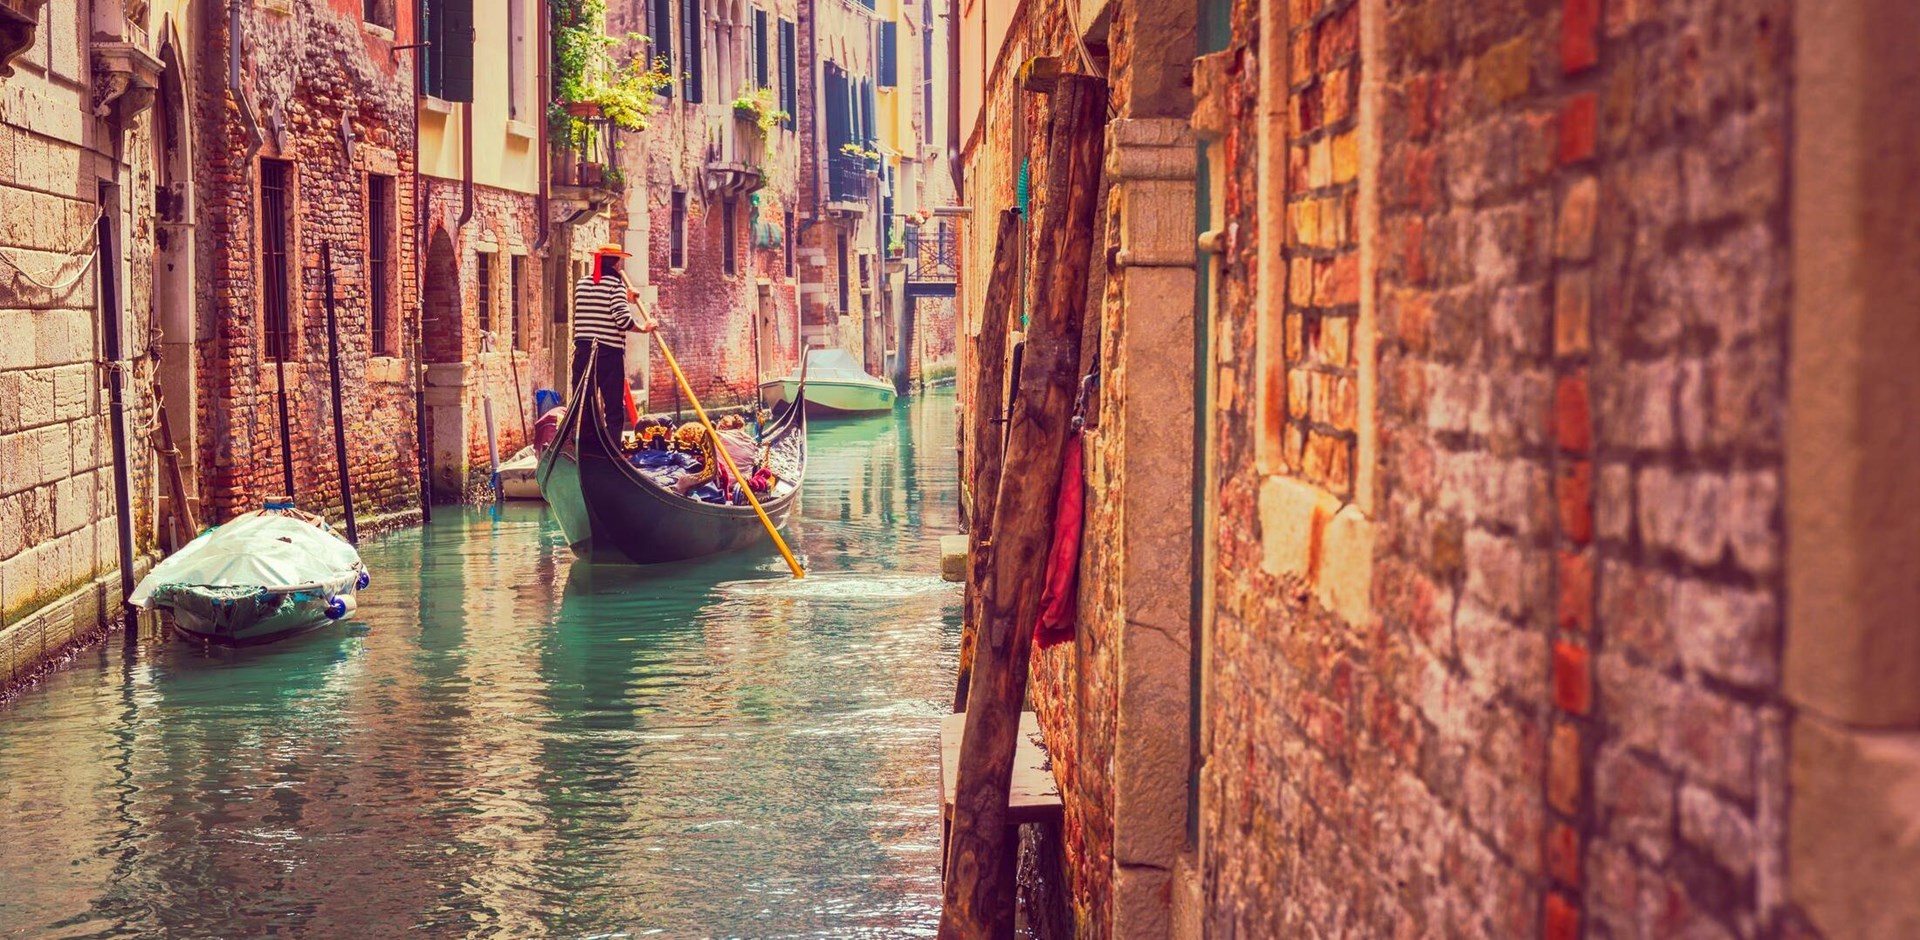 A man rows a Gondola down a narrow canal in Venice